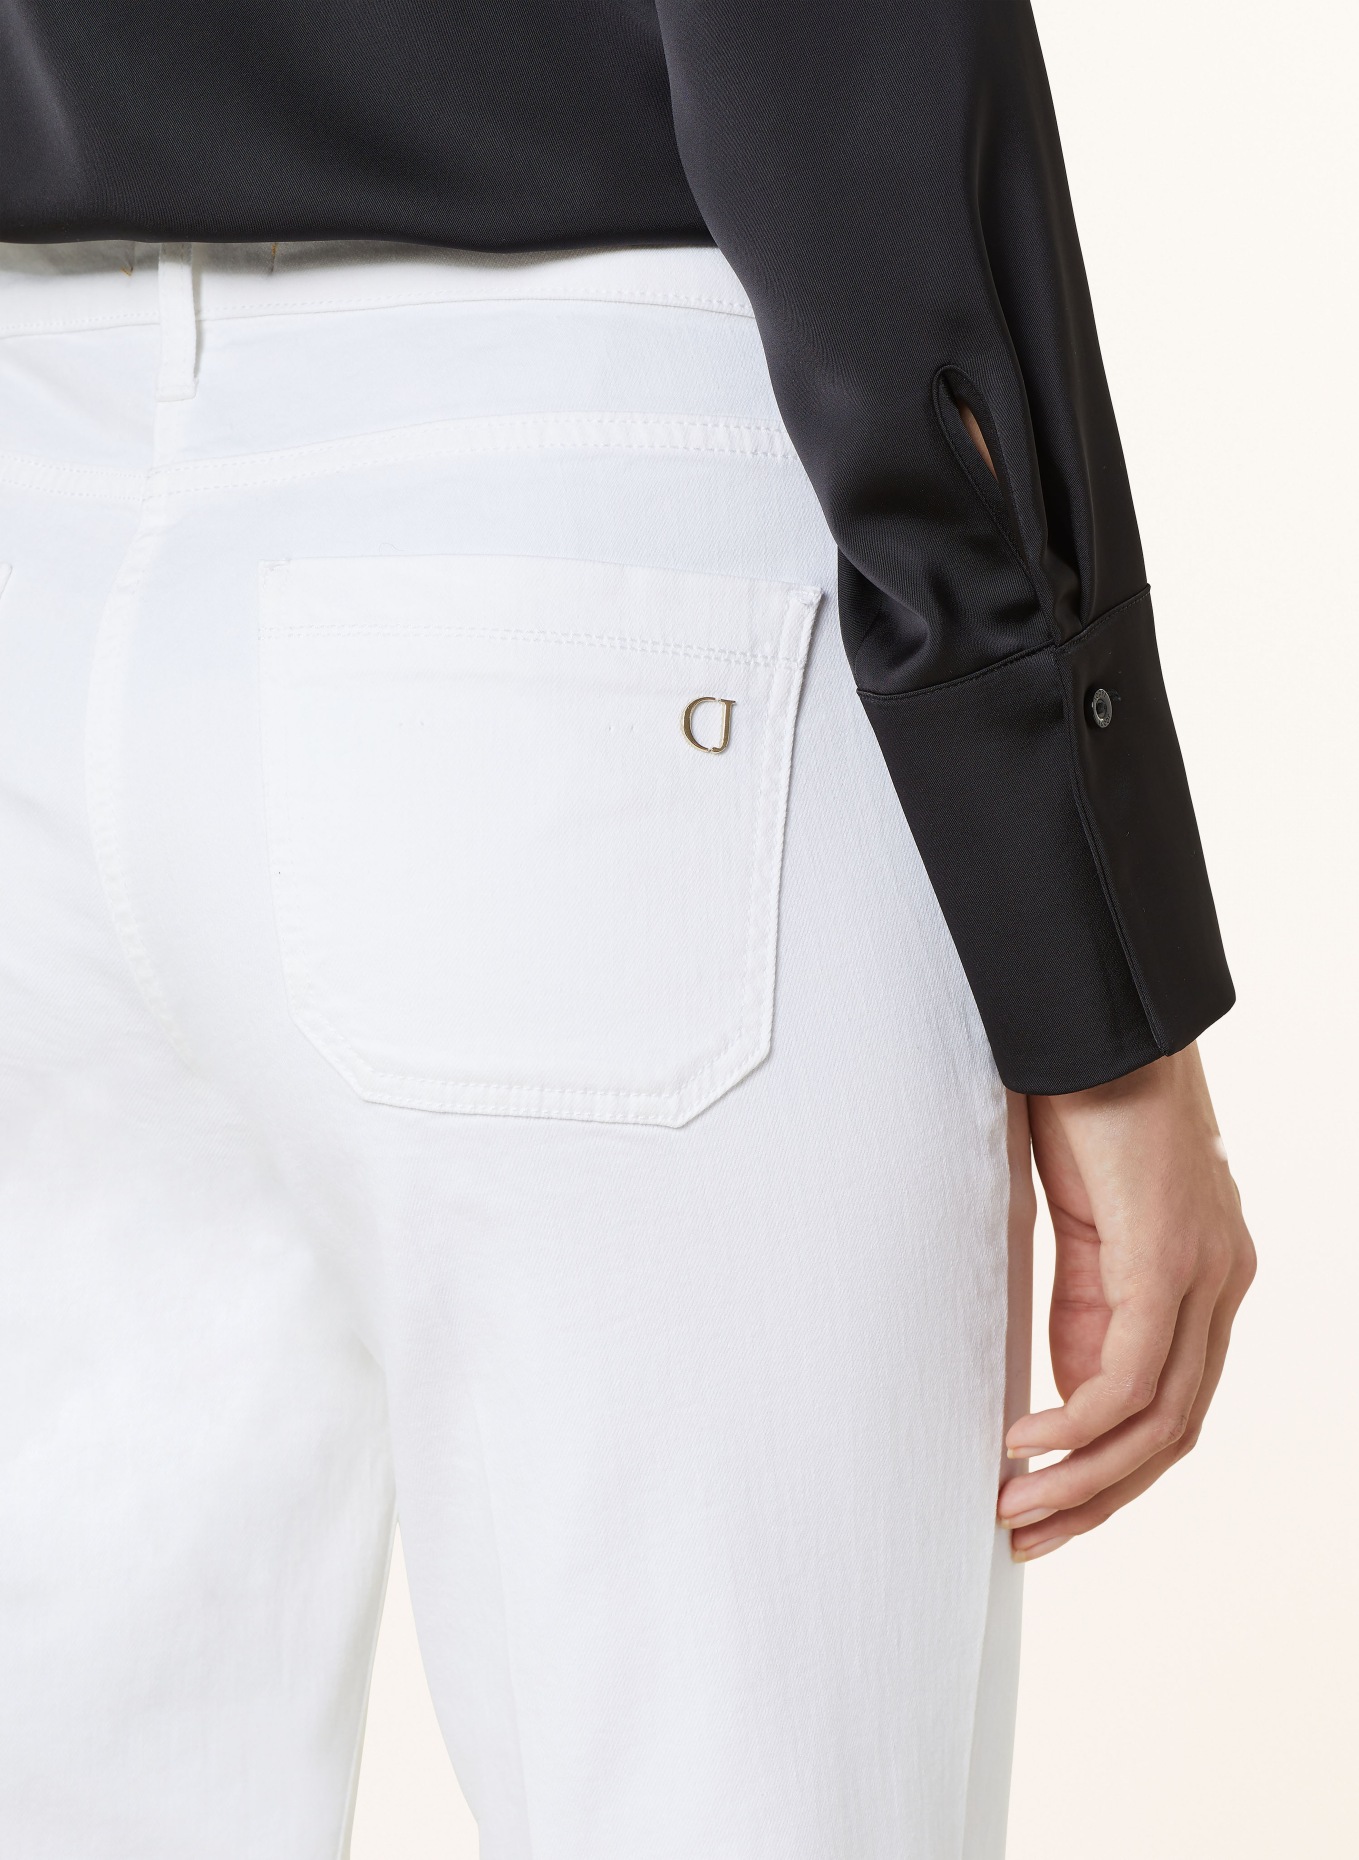 CAMBIO Jeans TESS, Farbe: 5007 classy white & fringed (Bild 5)